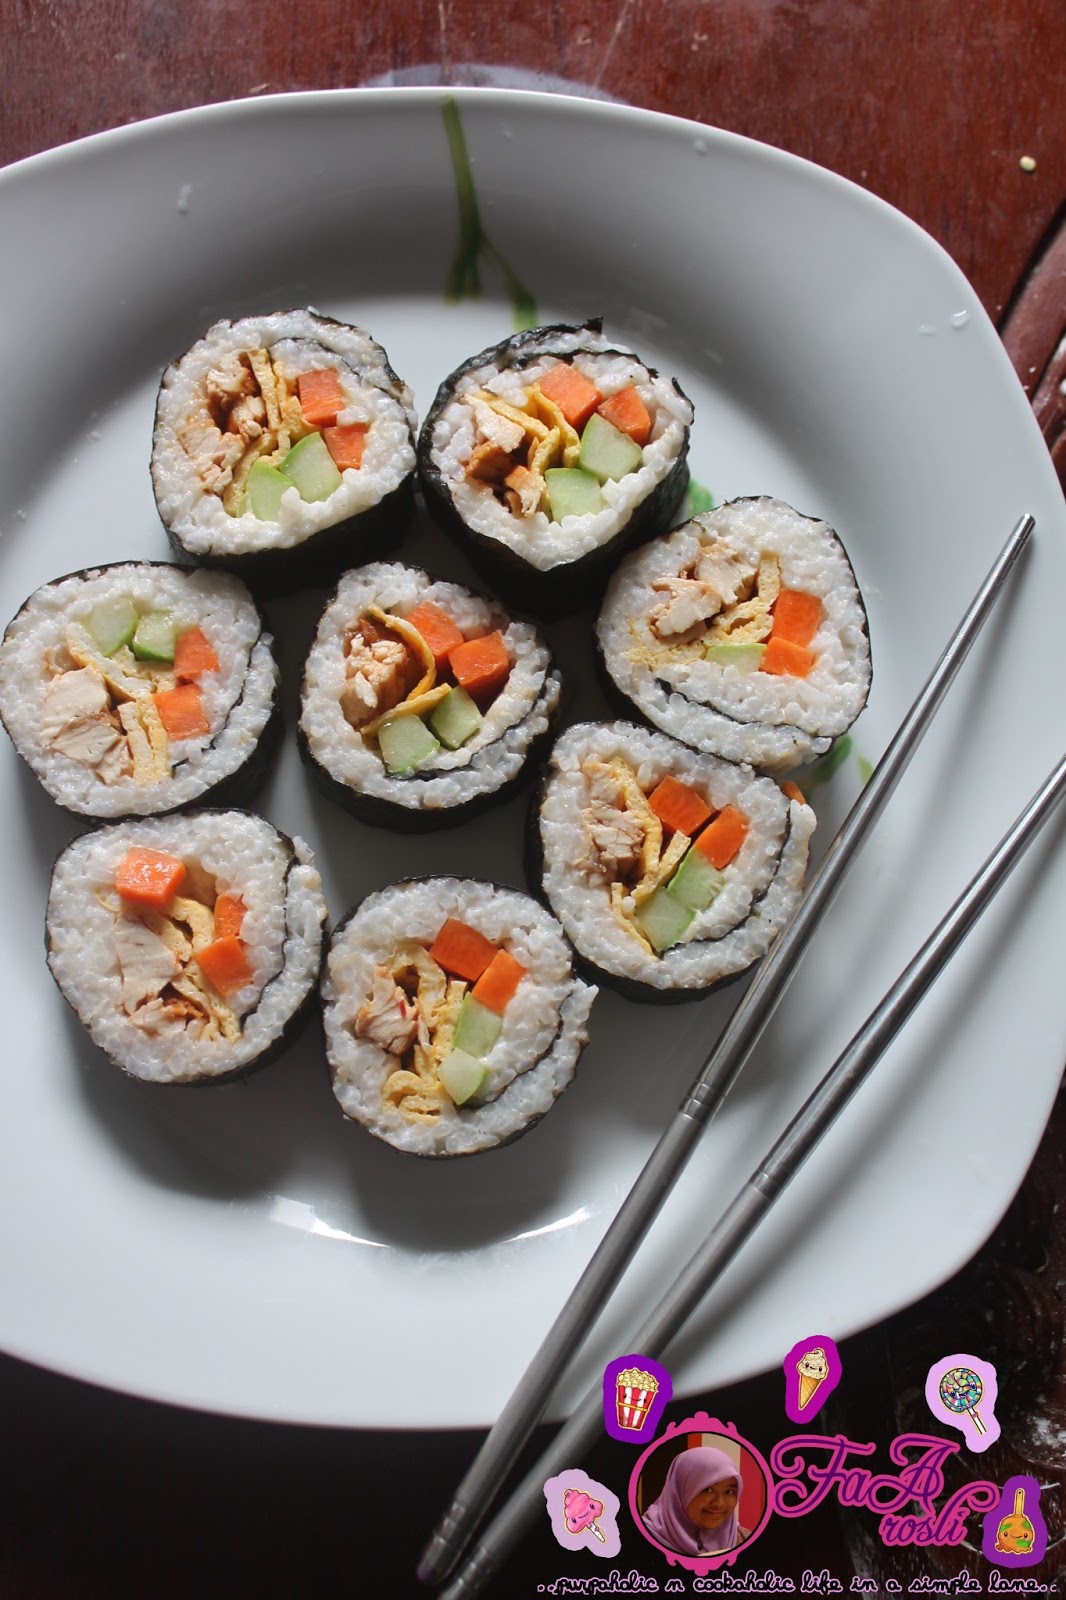 Faa.rosli: Kimbap / Korean Sushi